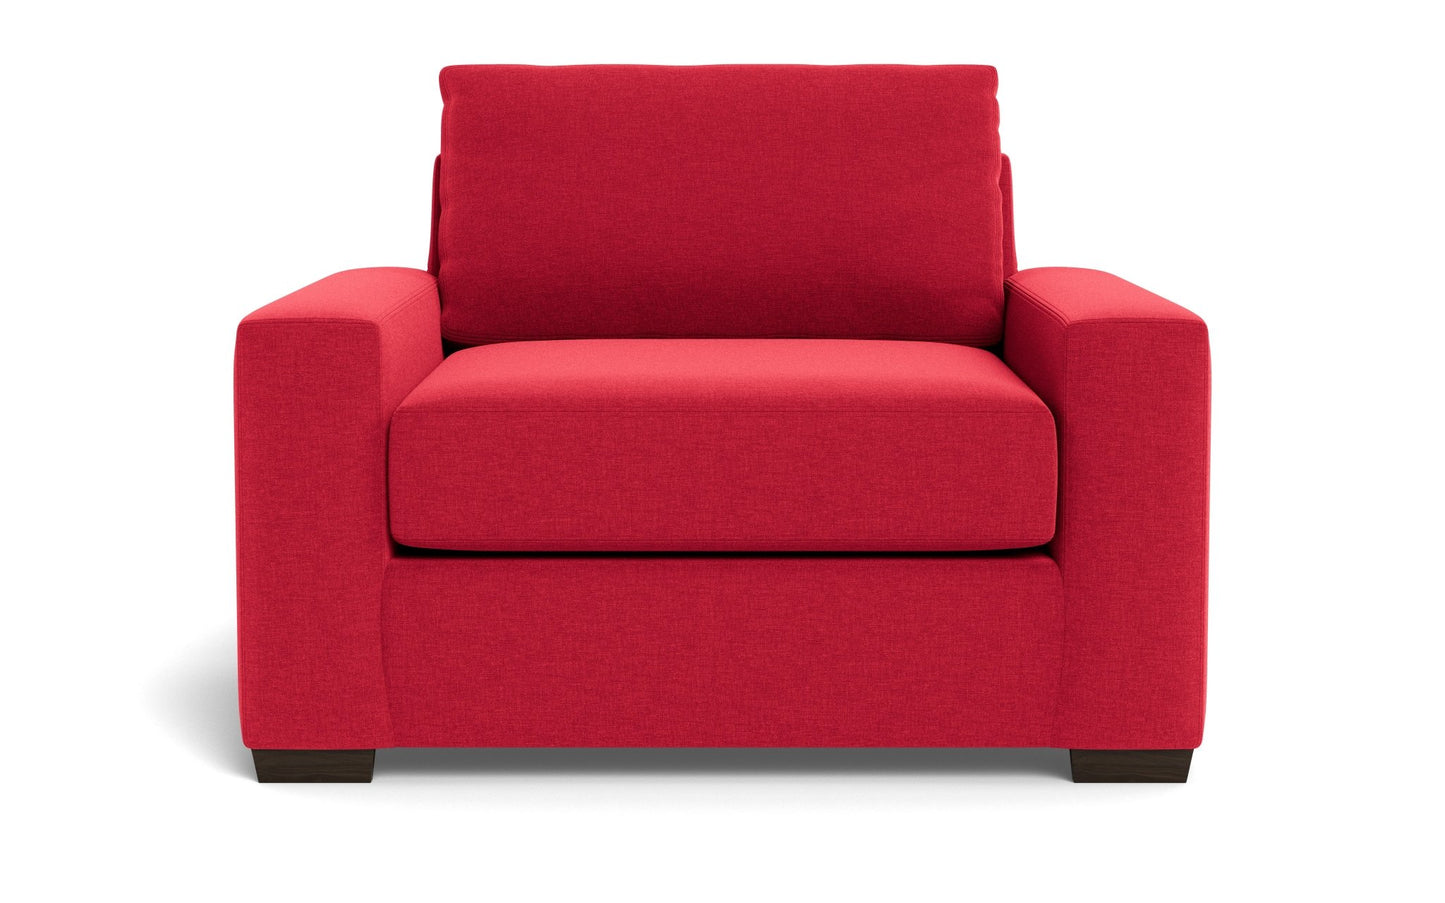 Mas Mesa Arm Chair - Bennett Red